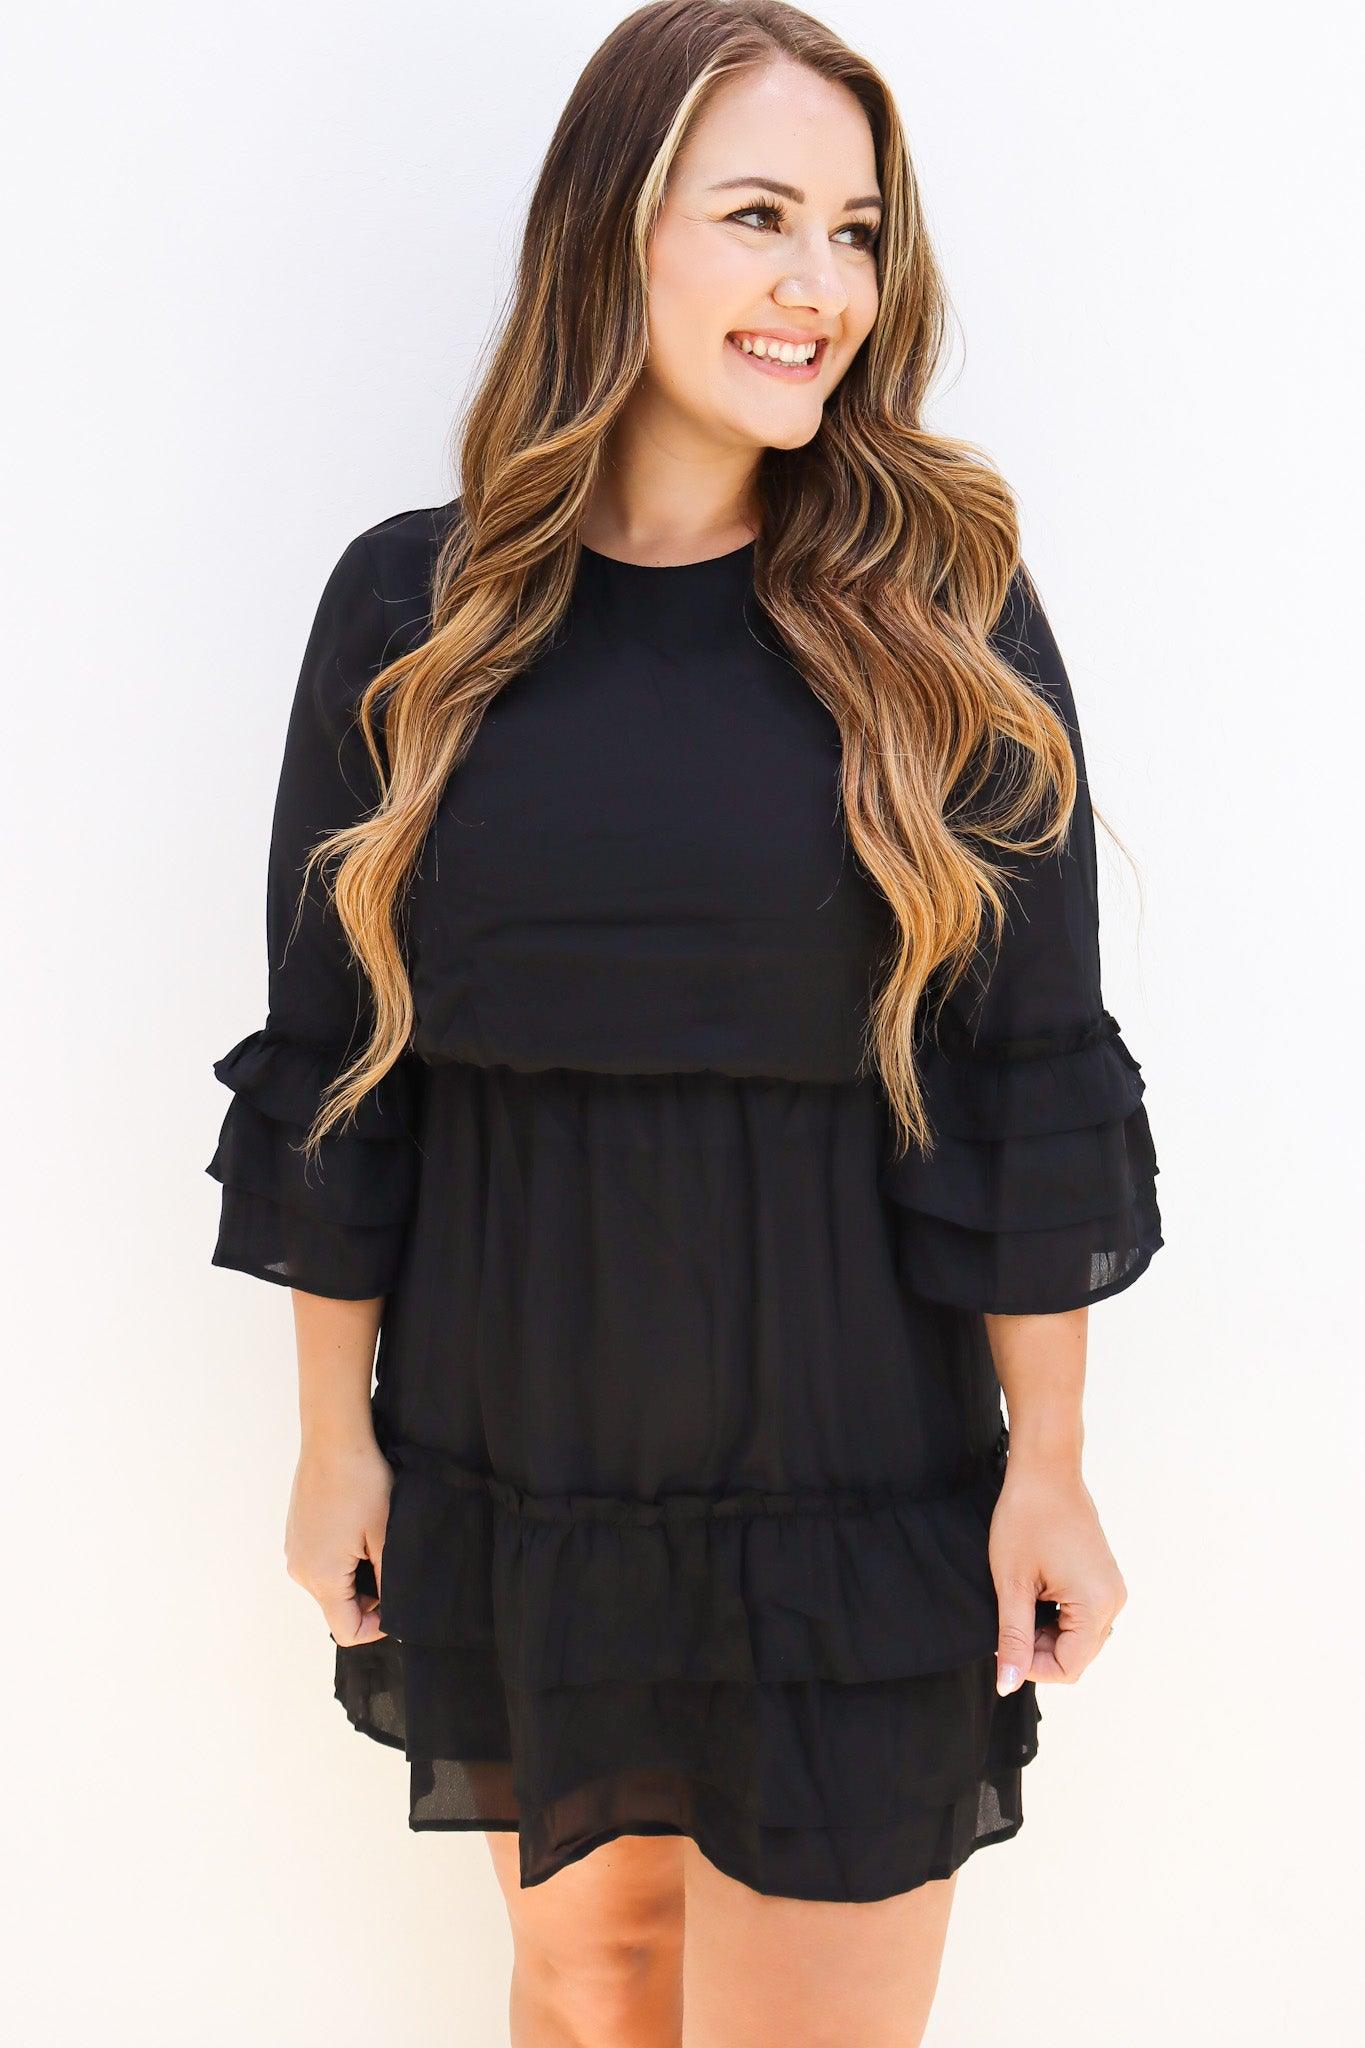 Layered Ruffle Sleeve Black Dress - Alexander Jane Boutique  